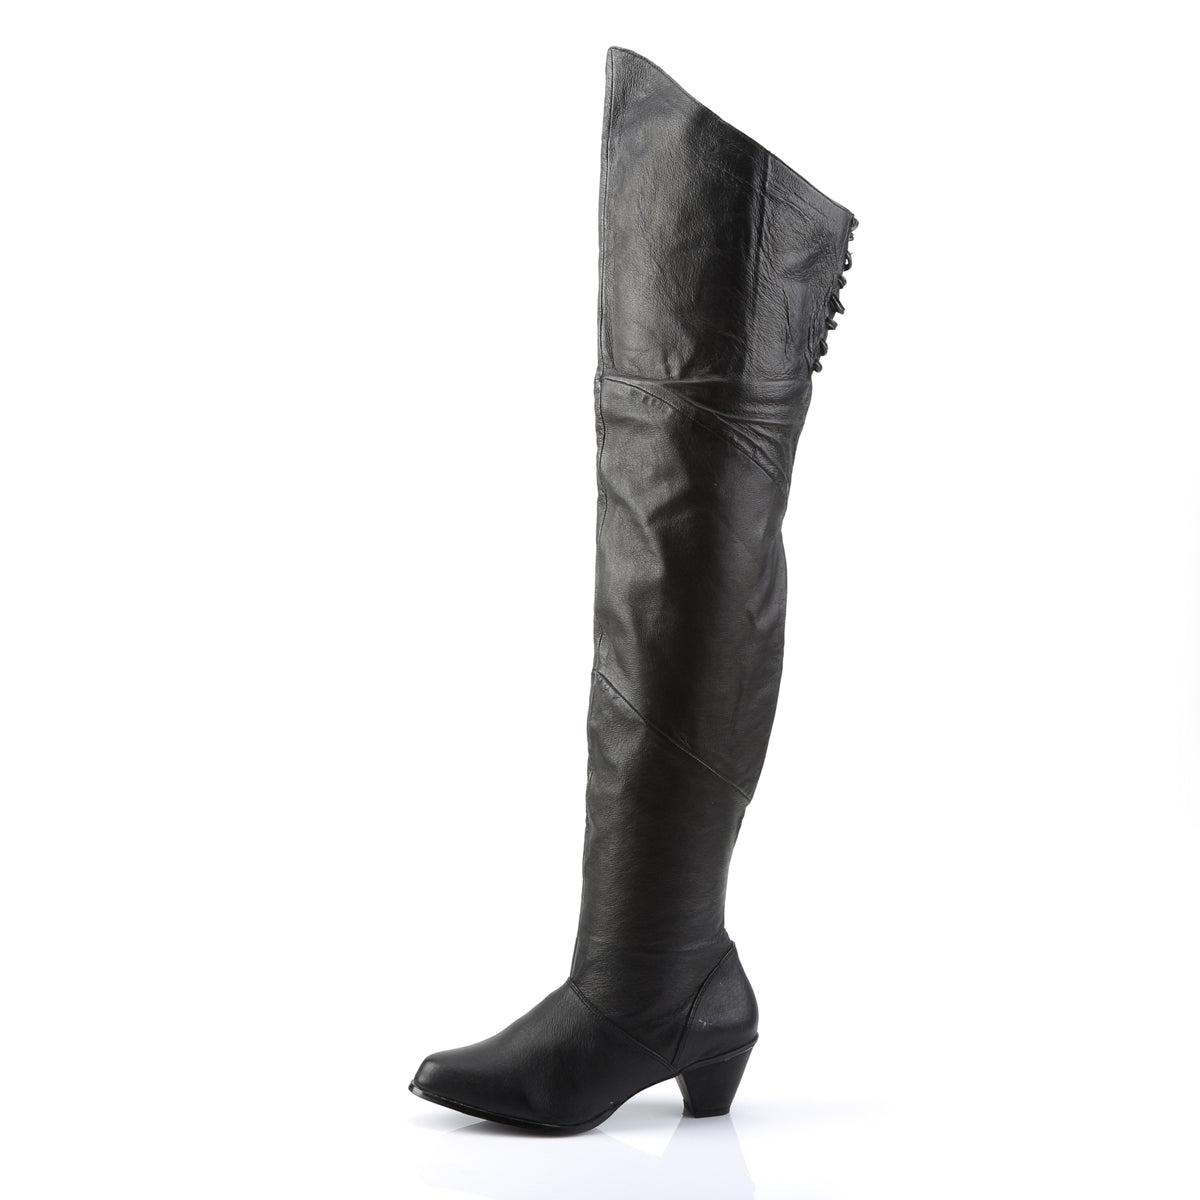 MAIDEN-8828 2.5" Heel Black Leather Women's Boots Funtasma Costume Shoes 